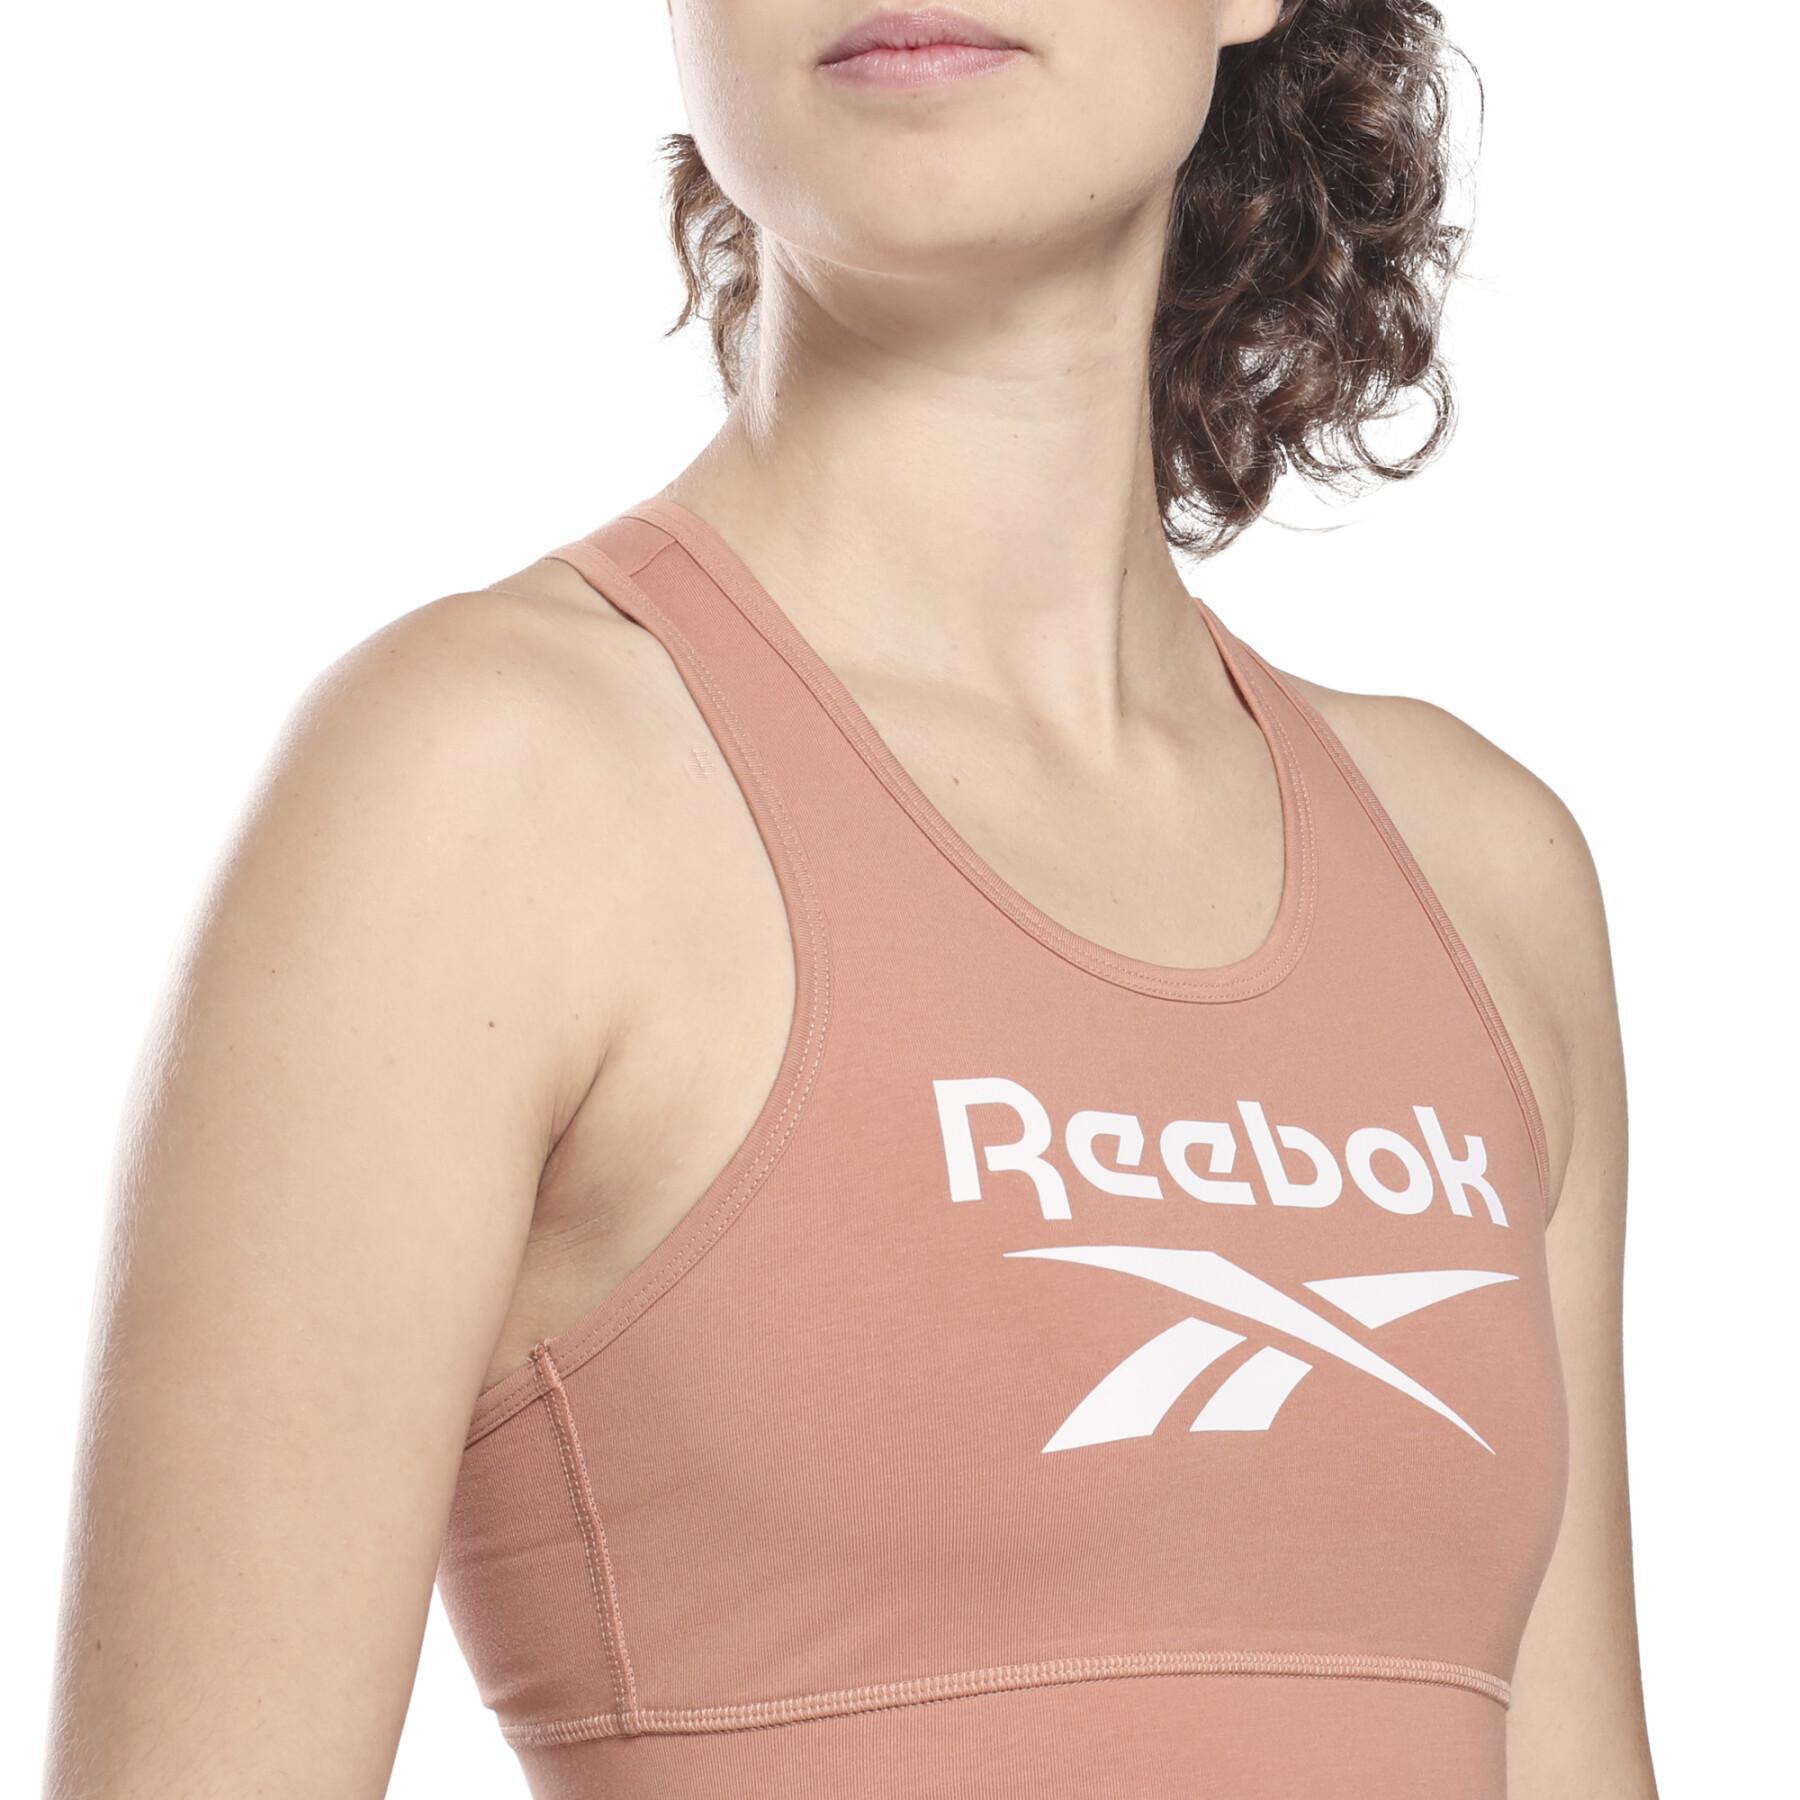 Women's sports bra Reebok Identity